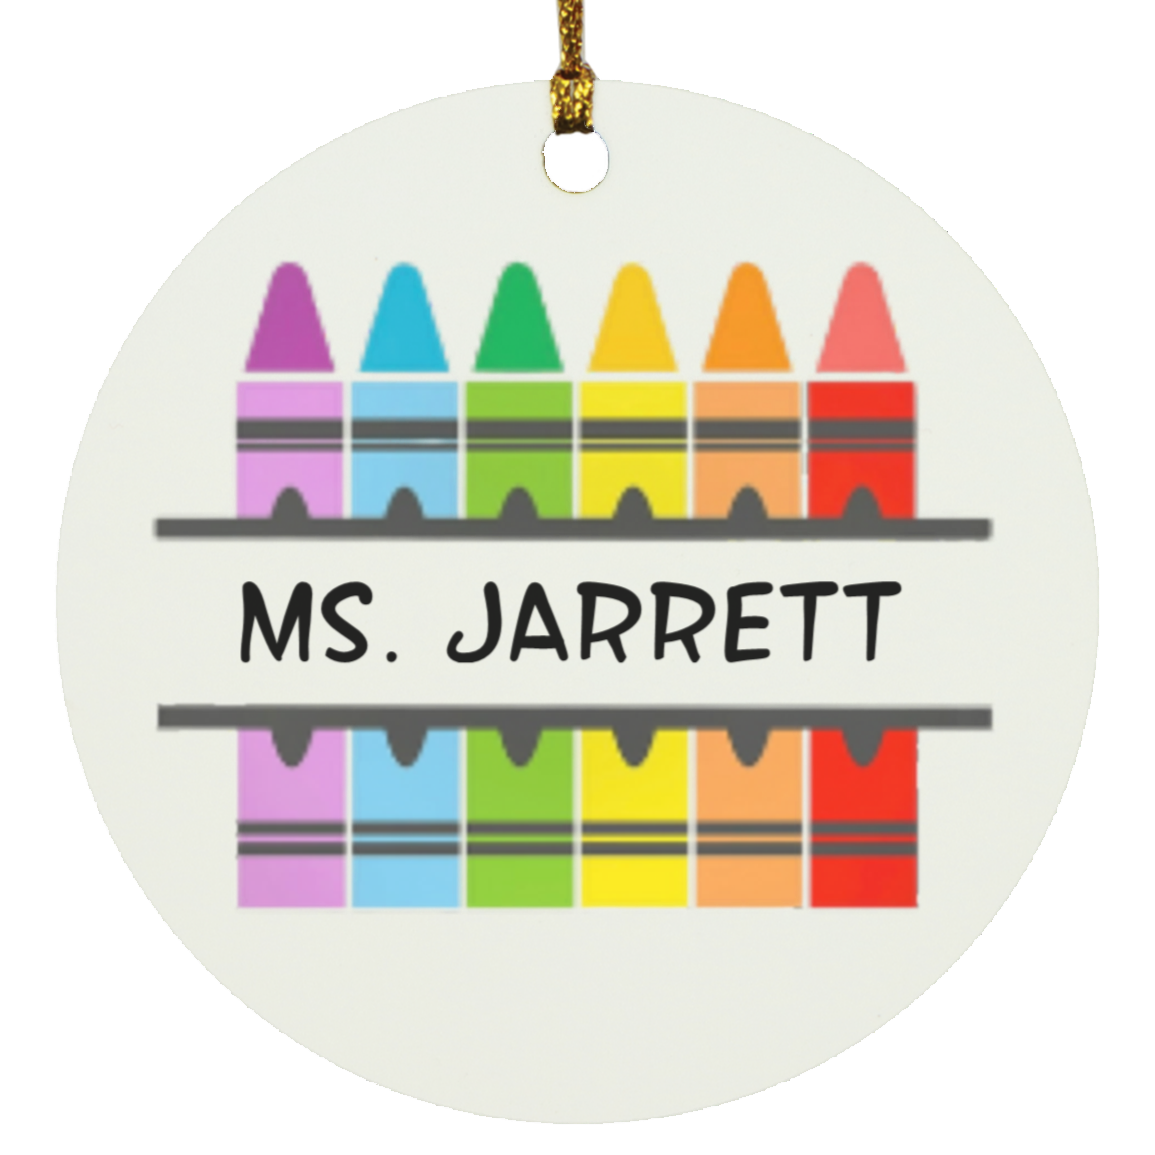 Personalized Teacher Ornament